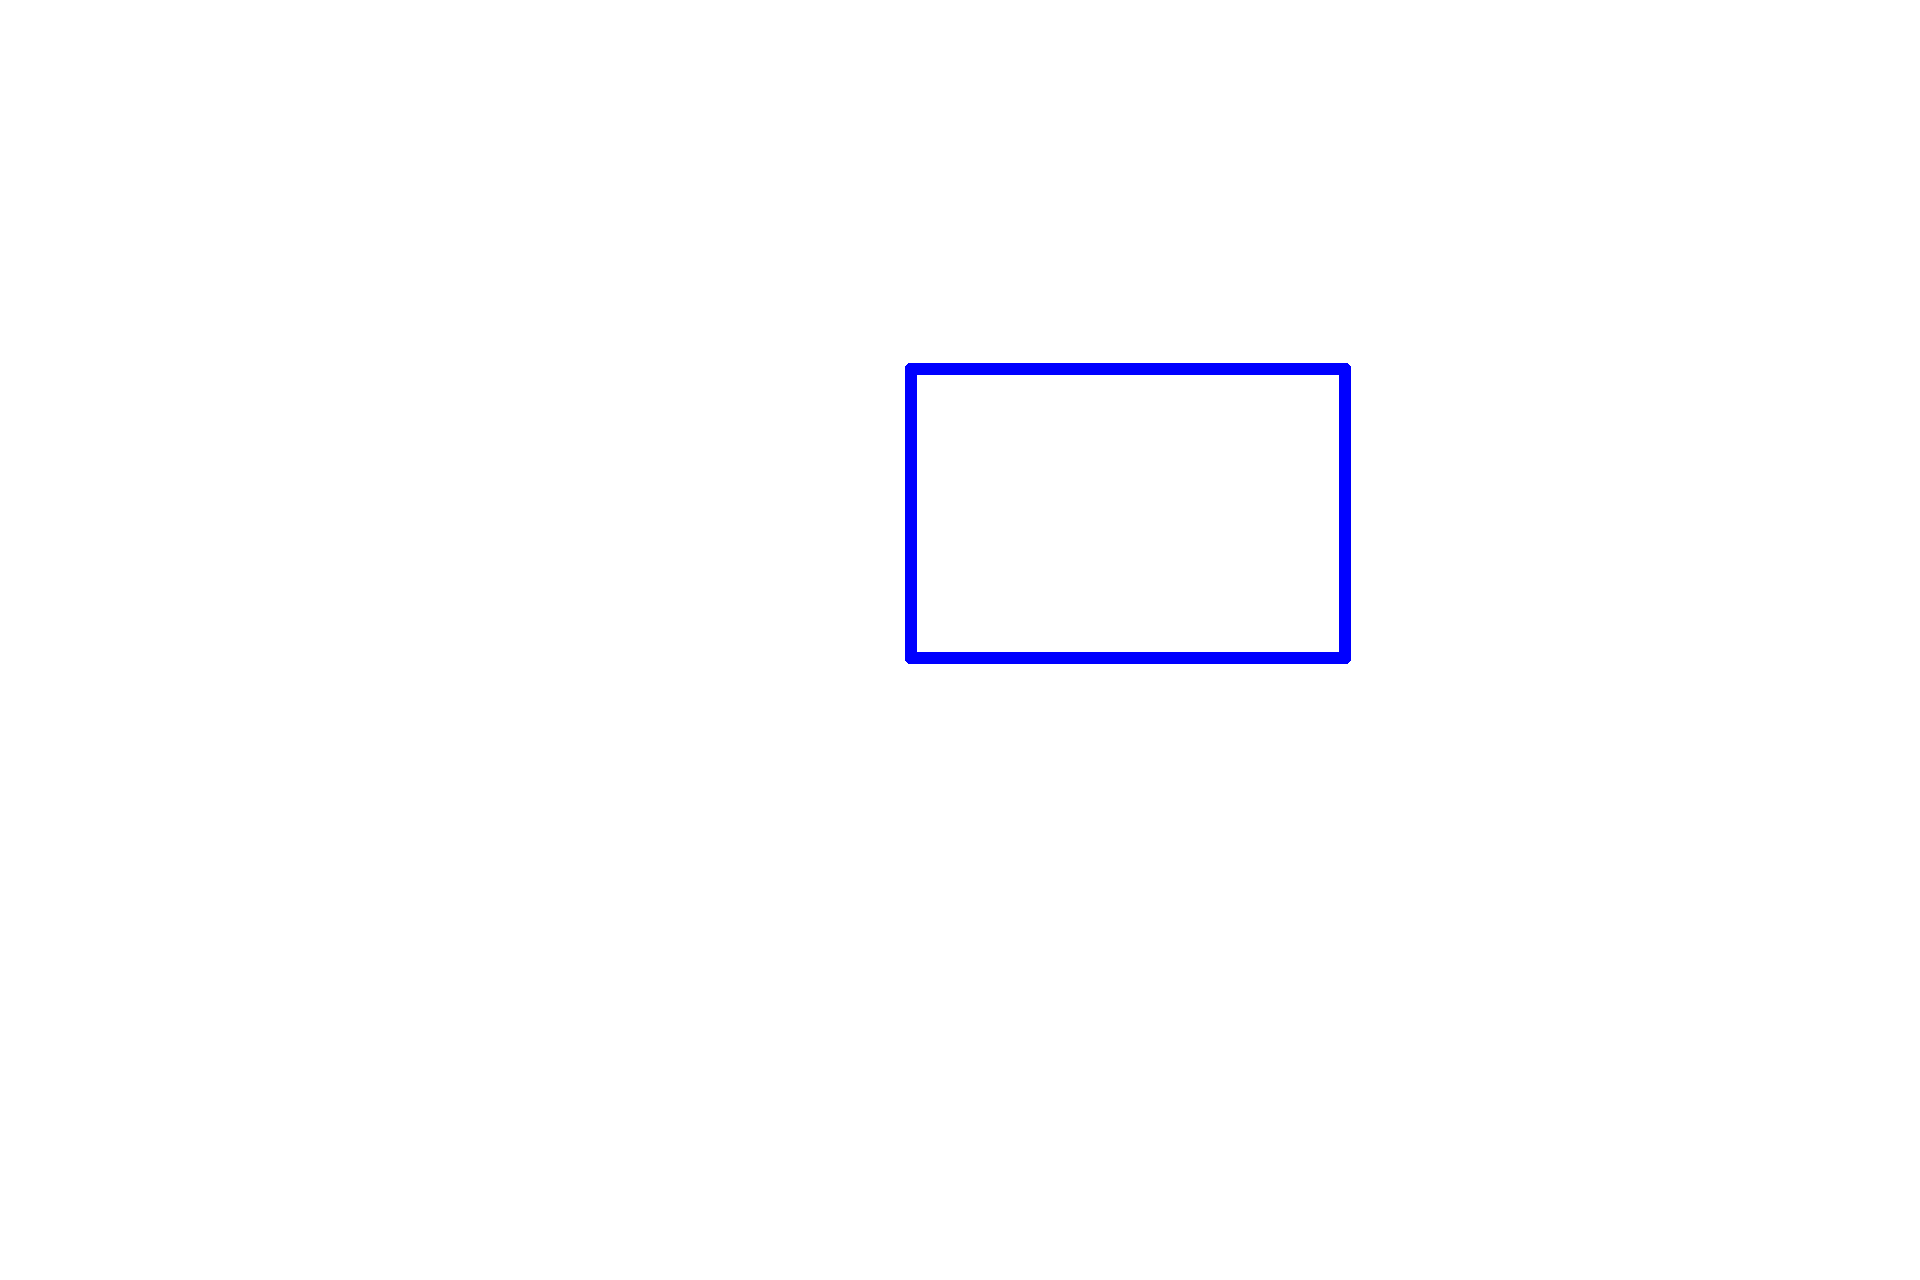 Region shown in the next image <p>This region in shown at higher magnification in the next image.</p>
